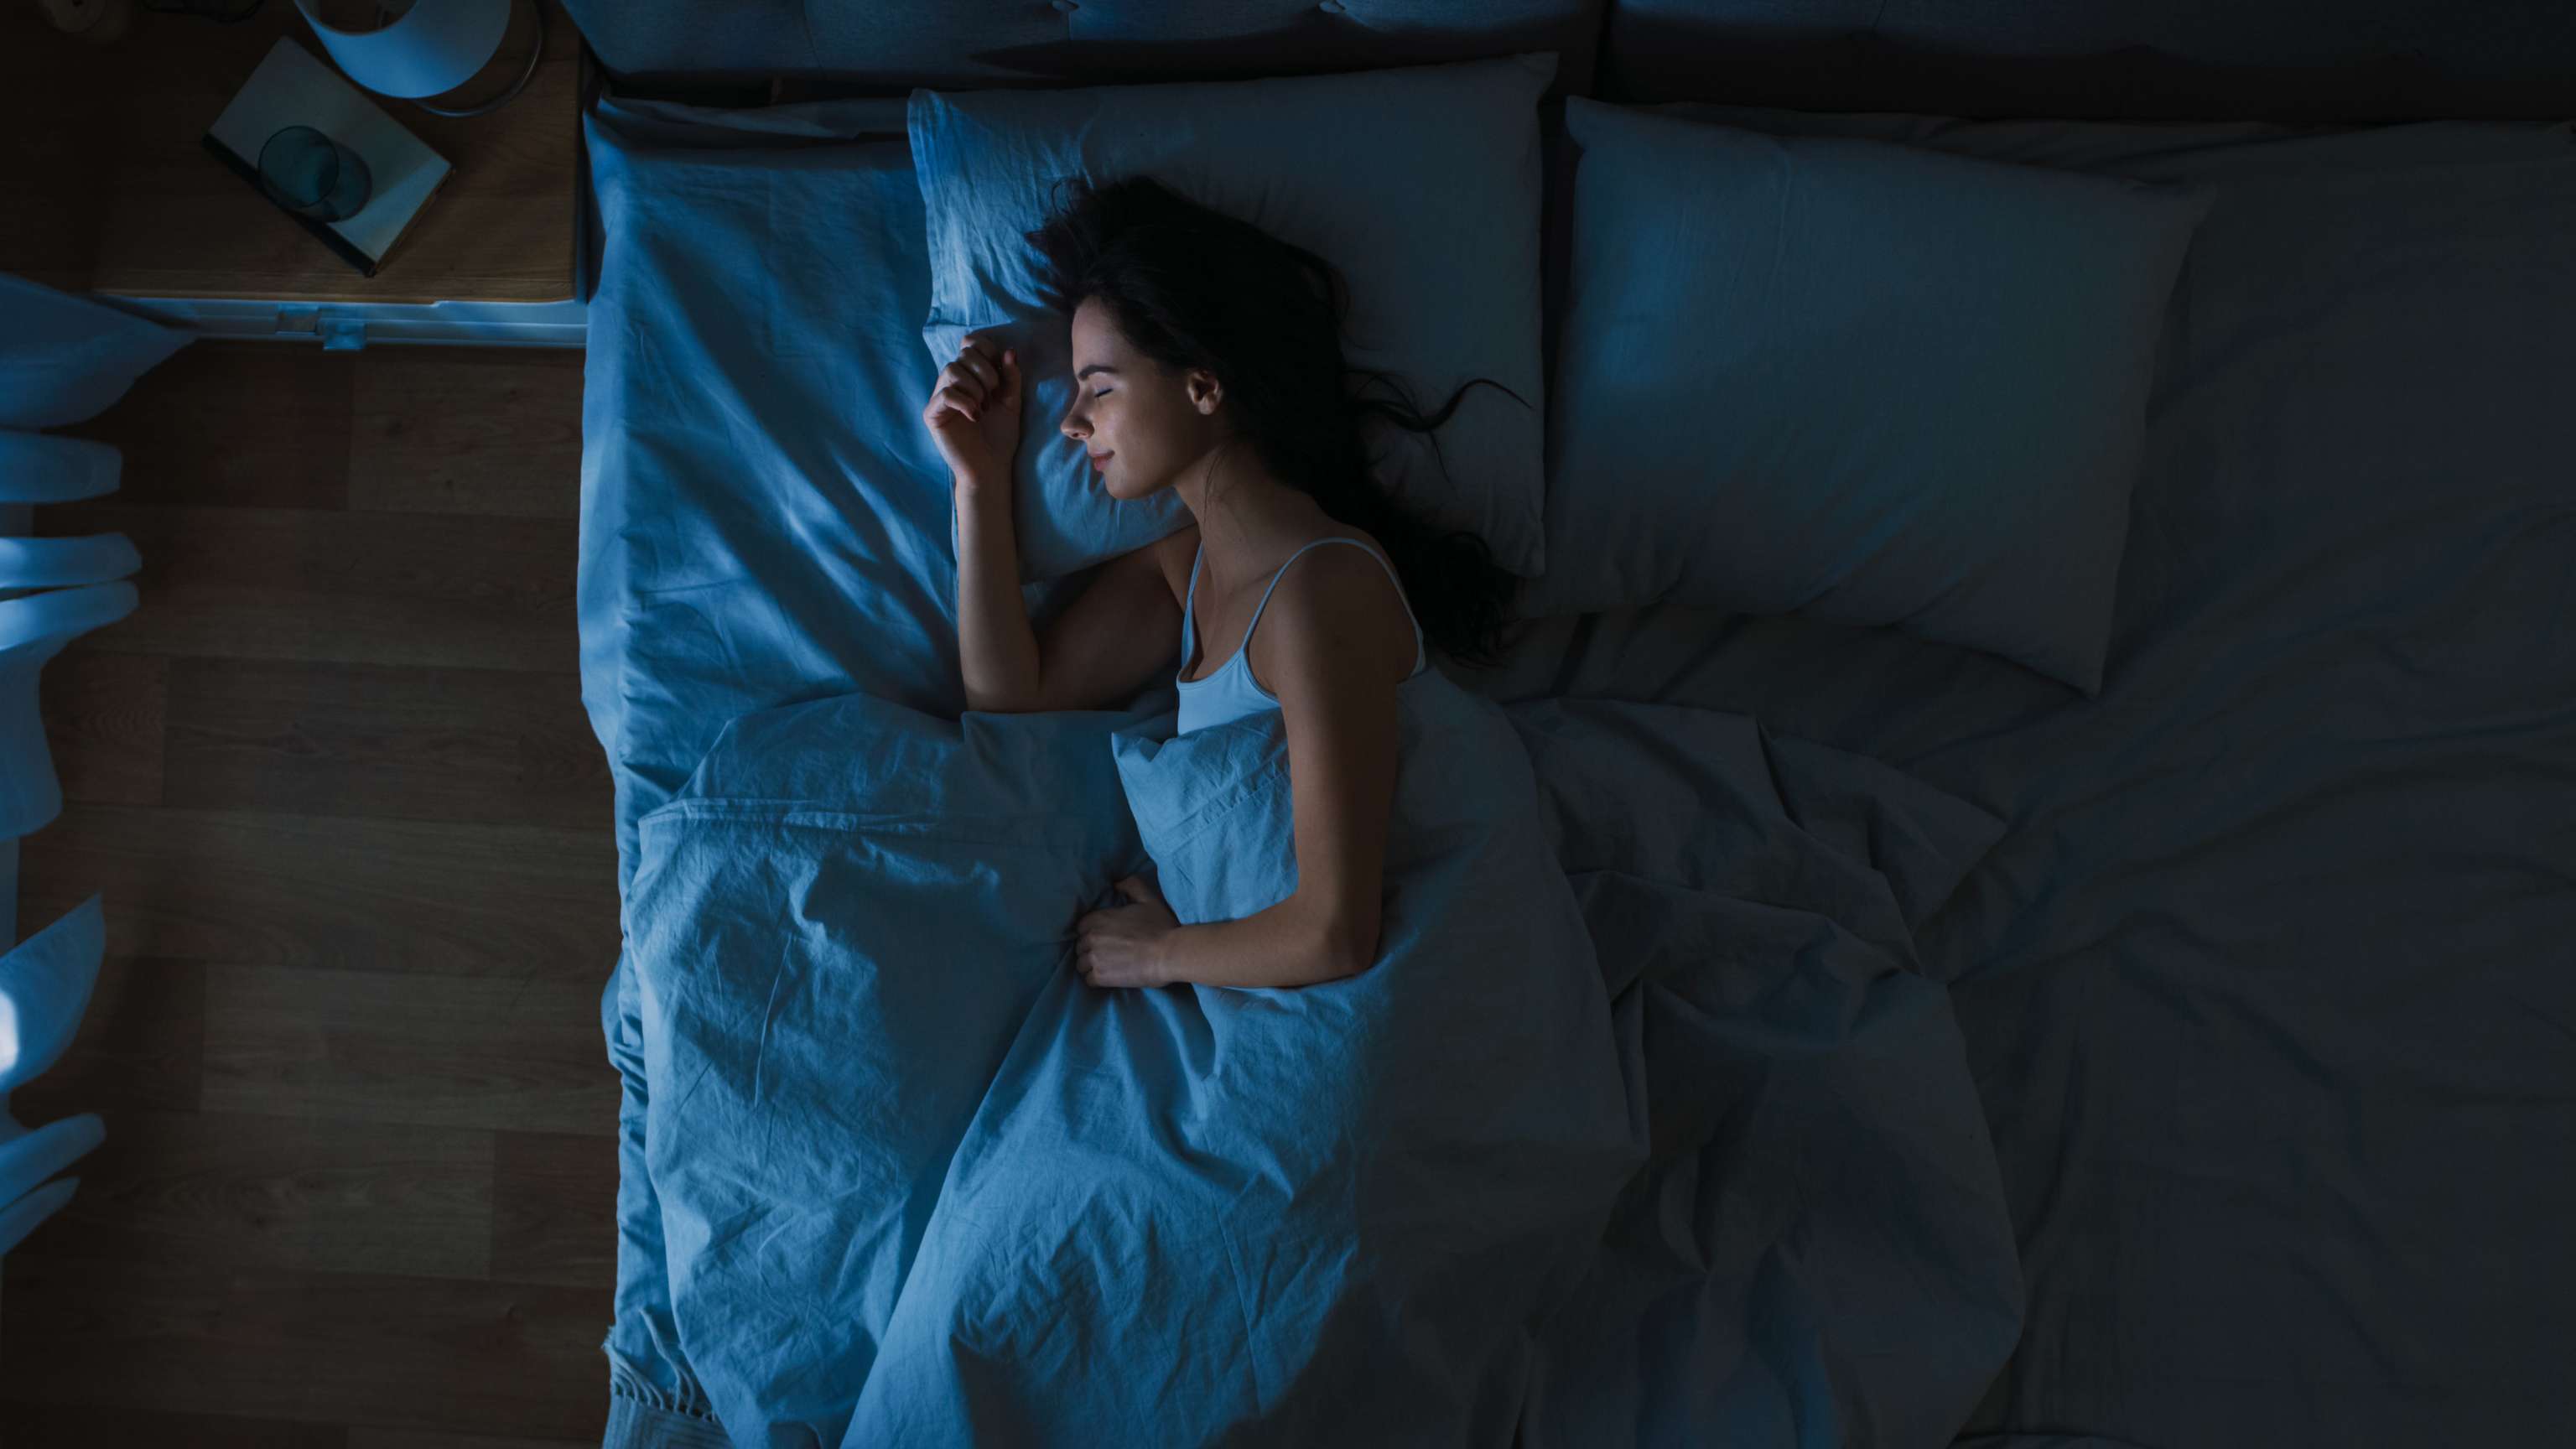 Effects of sleep restriction on women